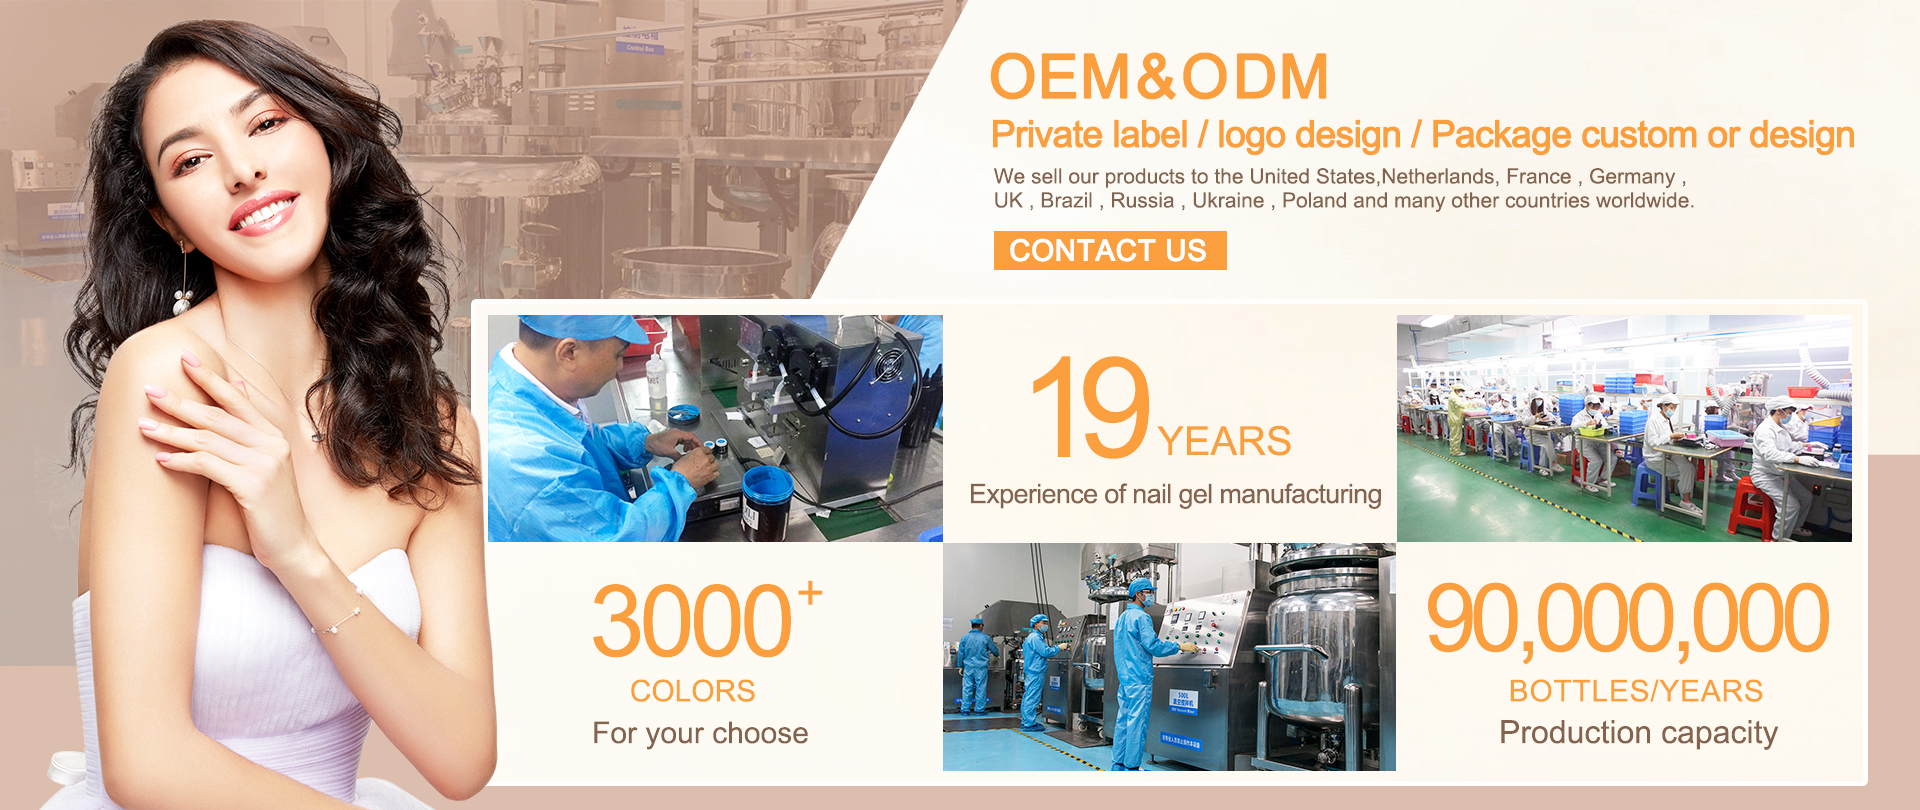 Hema Free TPO FREE HPMA free healthy gel polish.  Private label, package custom and design